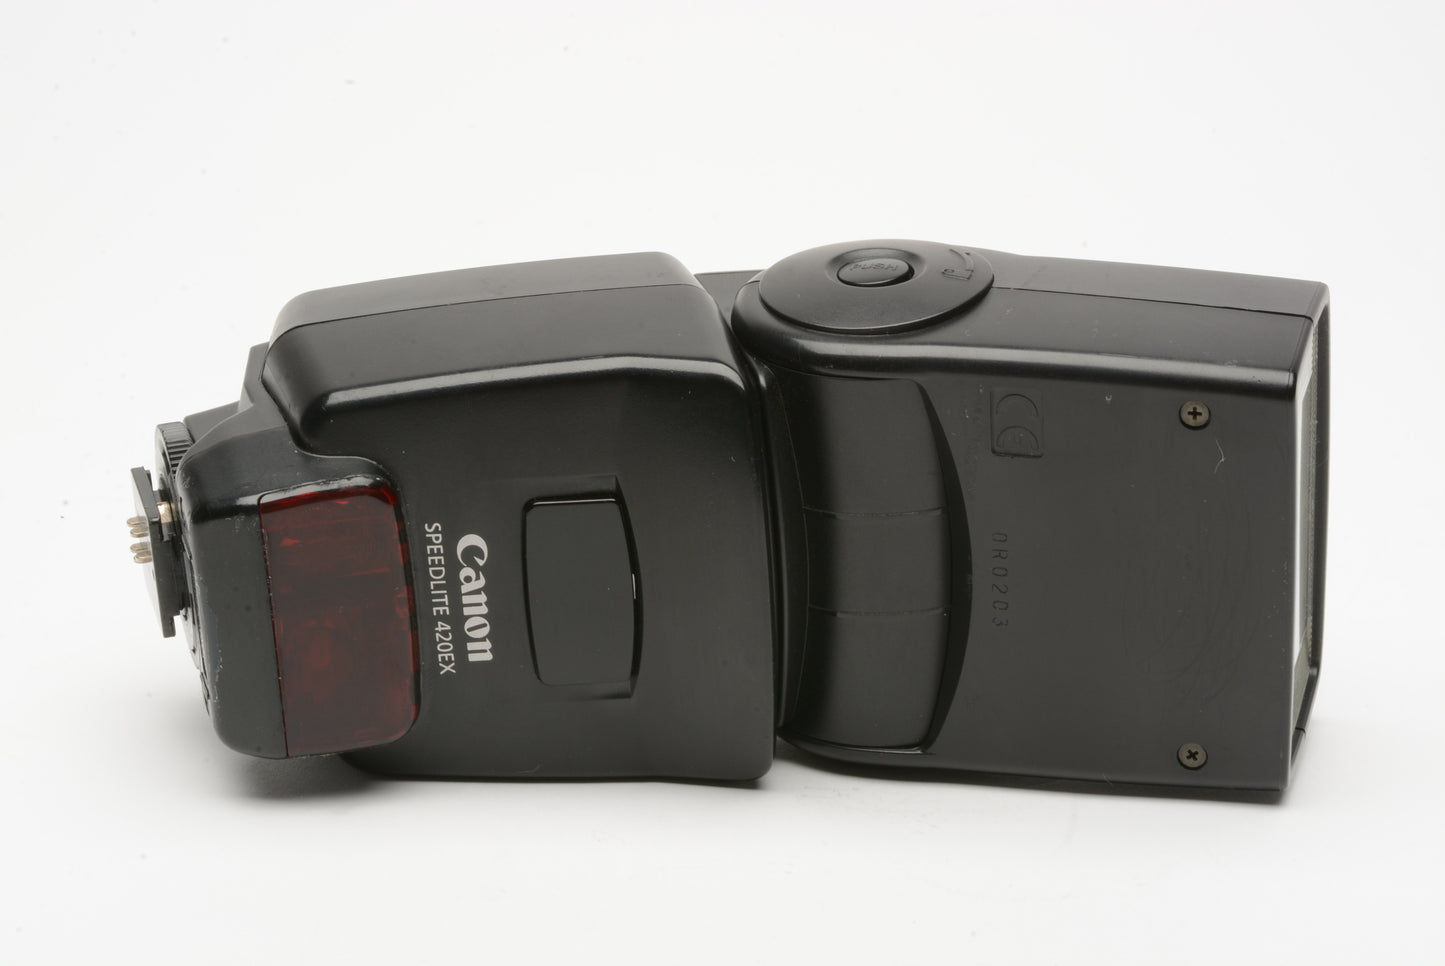 Canon 420EX Speedlite Flash, tested, works great